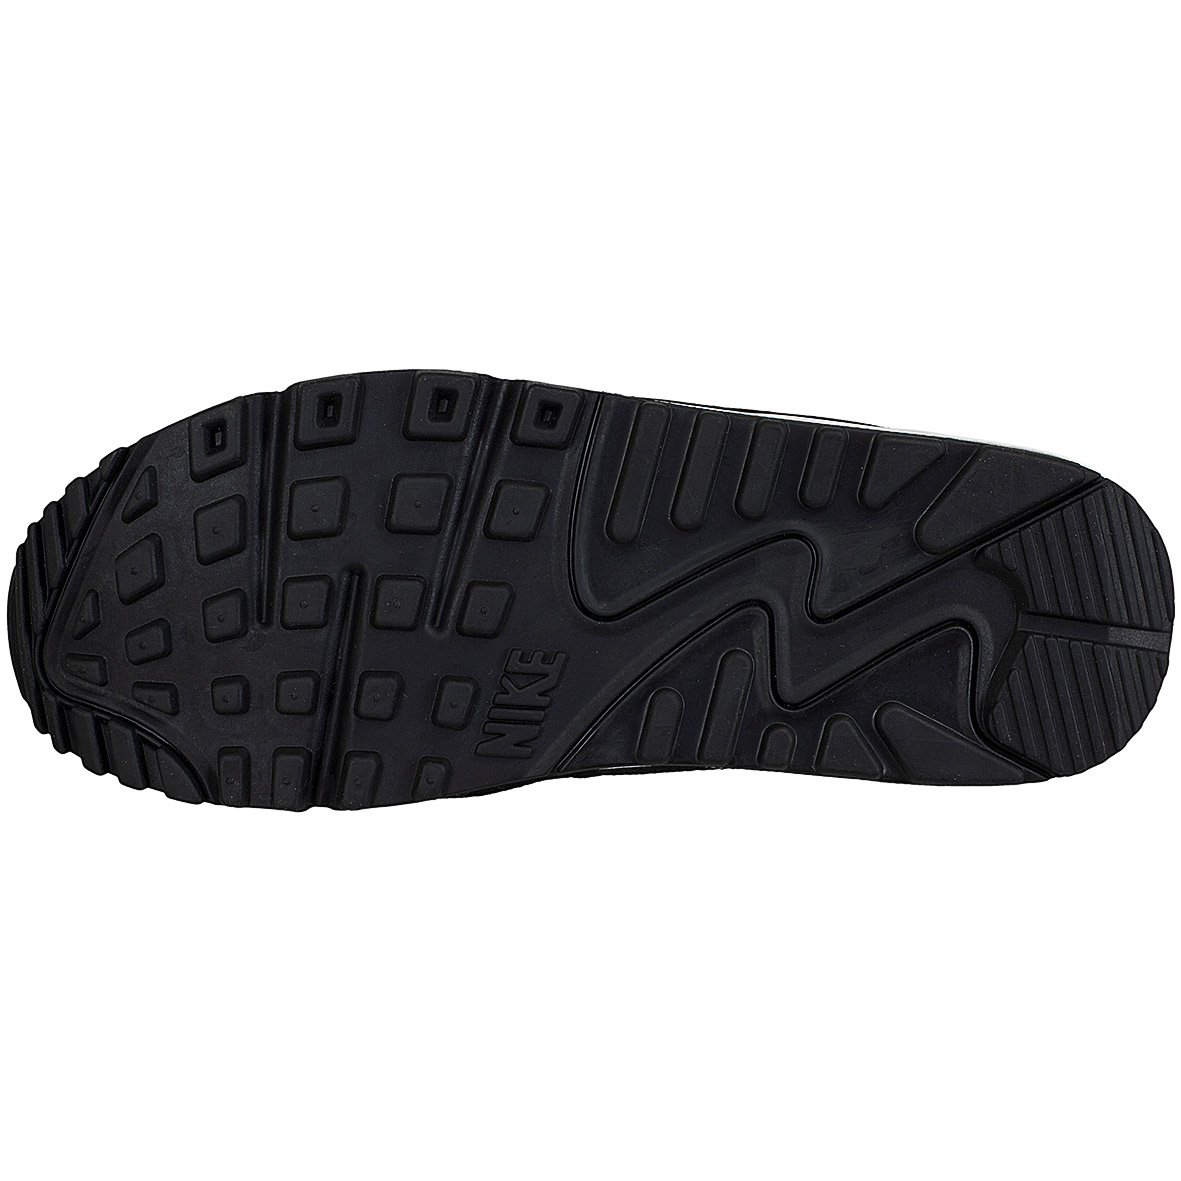 ☆ Nike Damen Sneaker Air Max 90 SE schwarz/schwarz - hier bestellen!